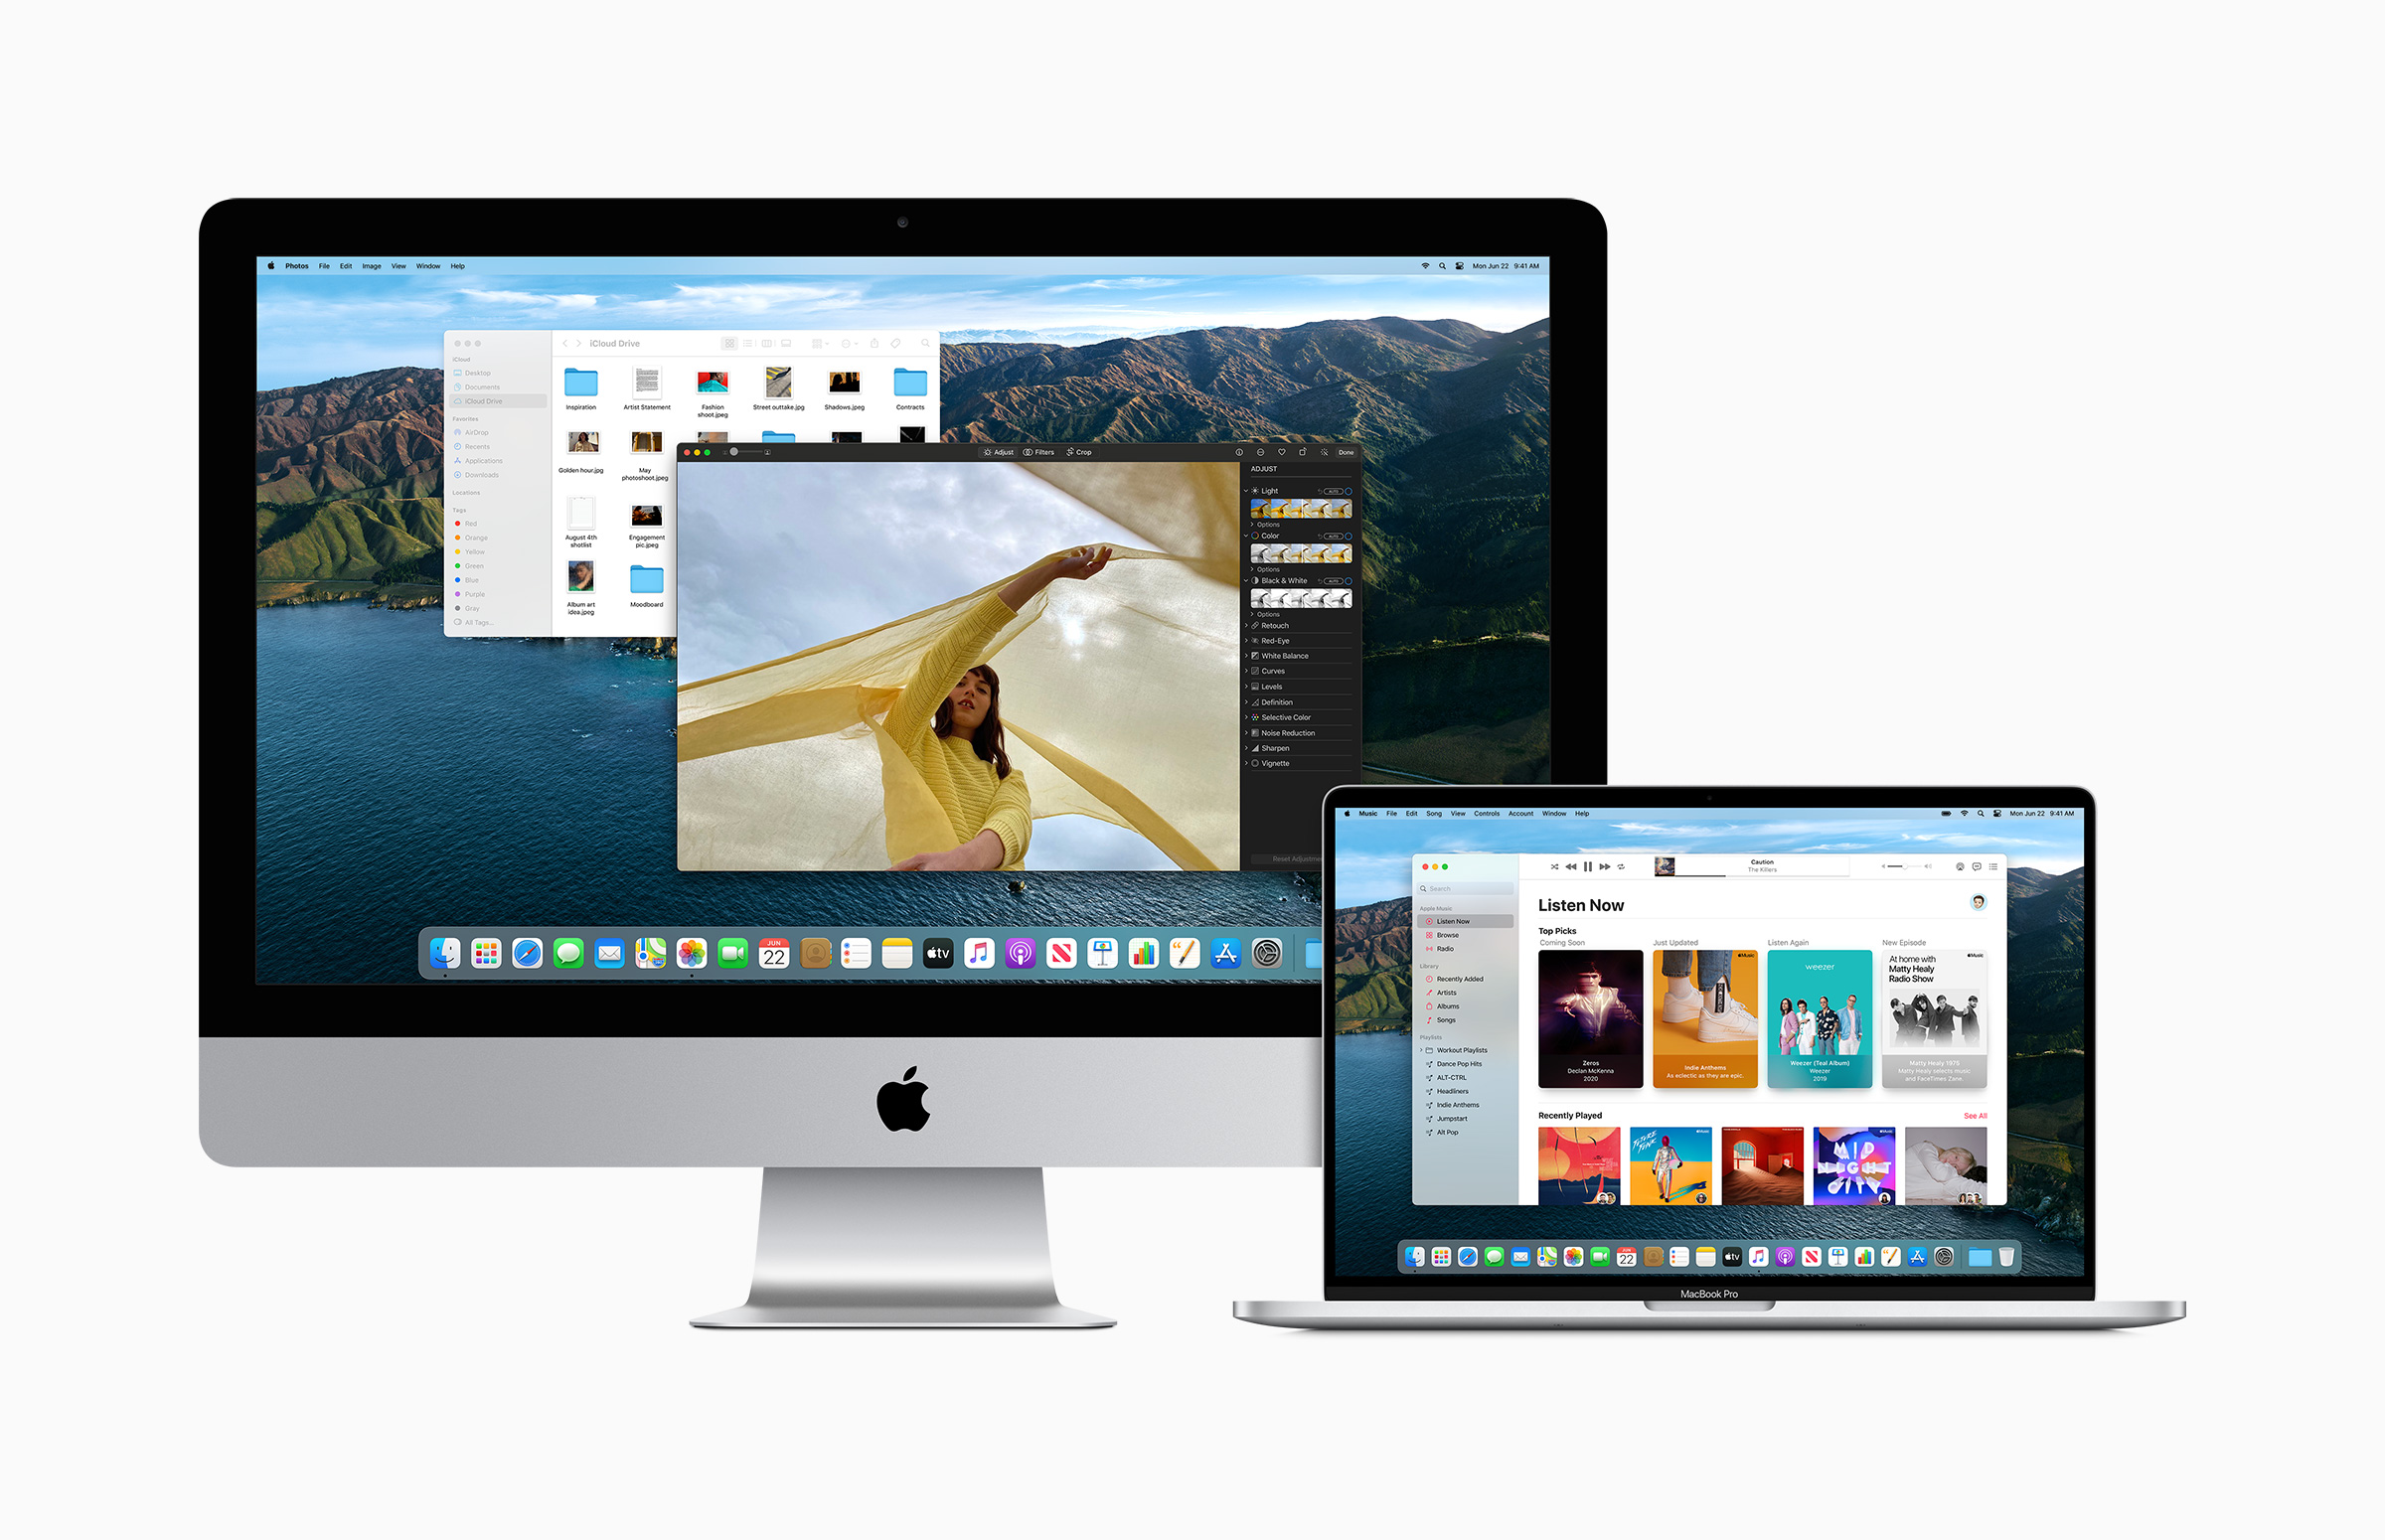 A Mac monitor and MacBook Pro